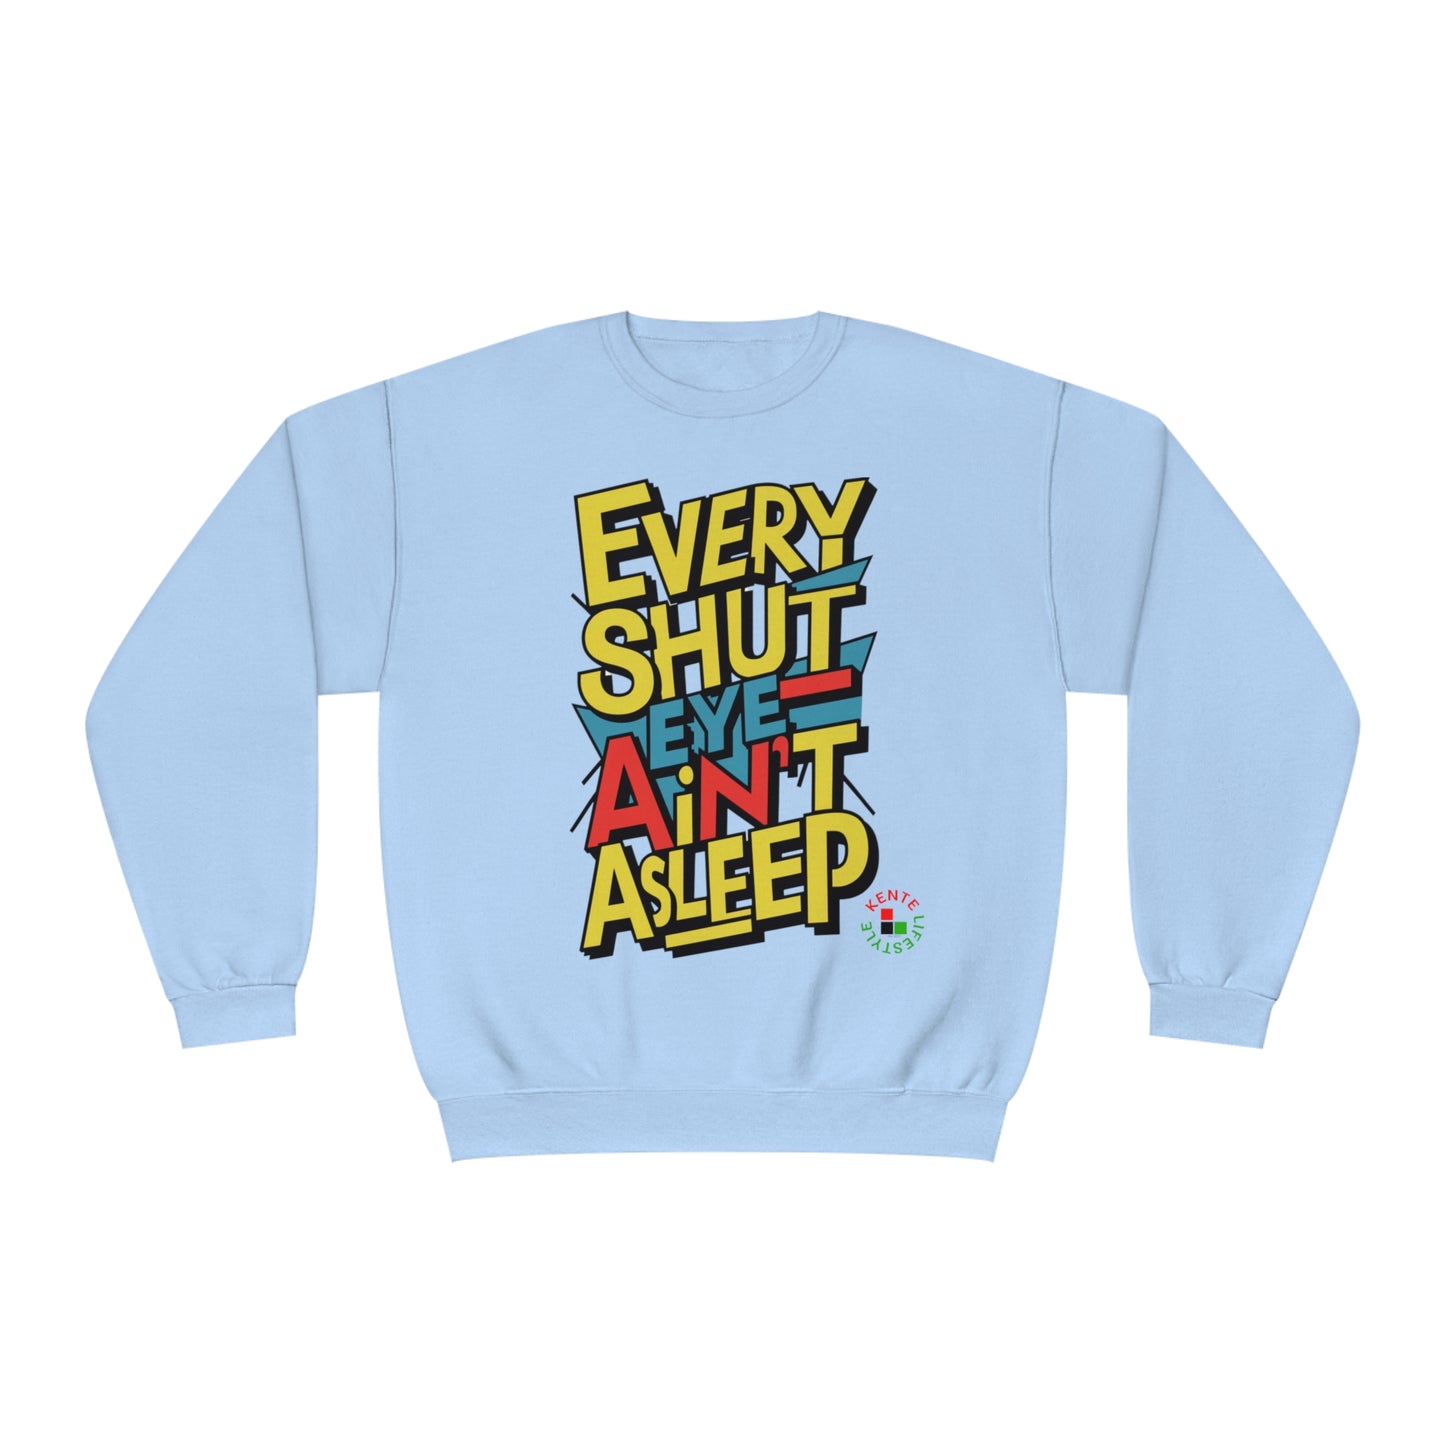 Every Shut Eye Ain't Asleep - Sweatshirt